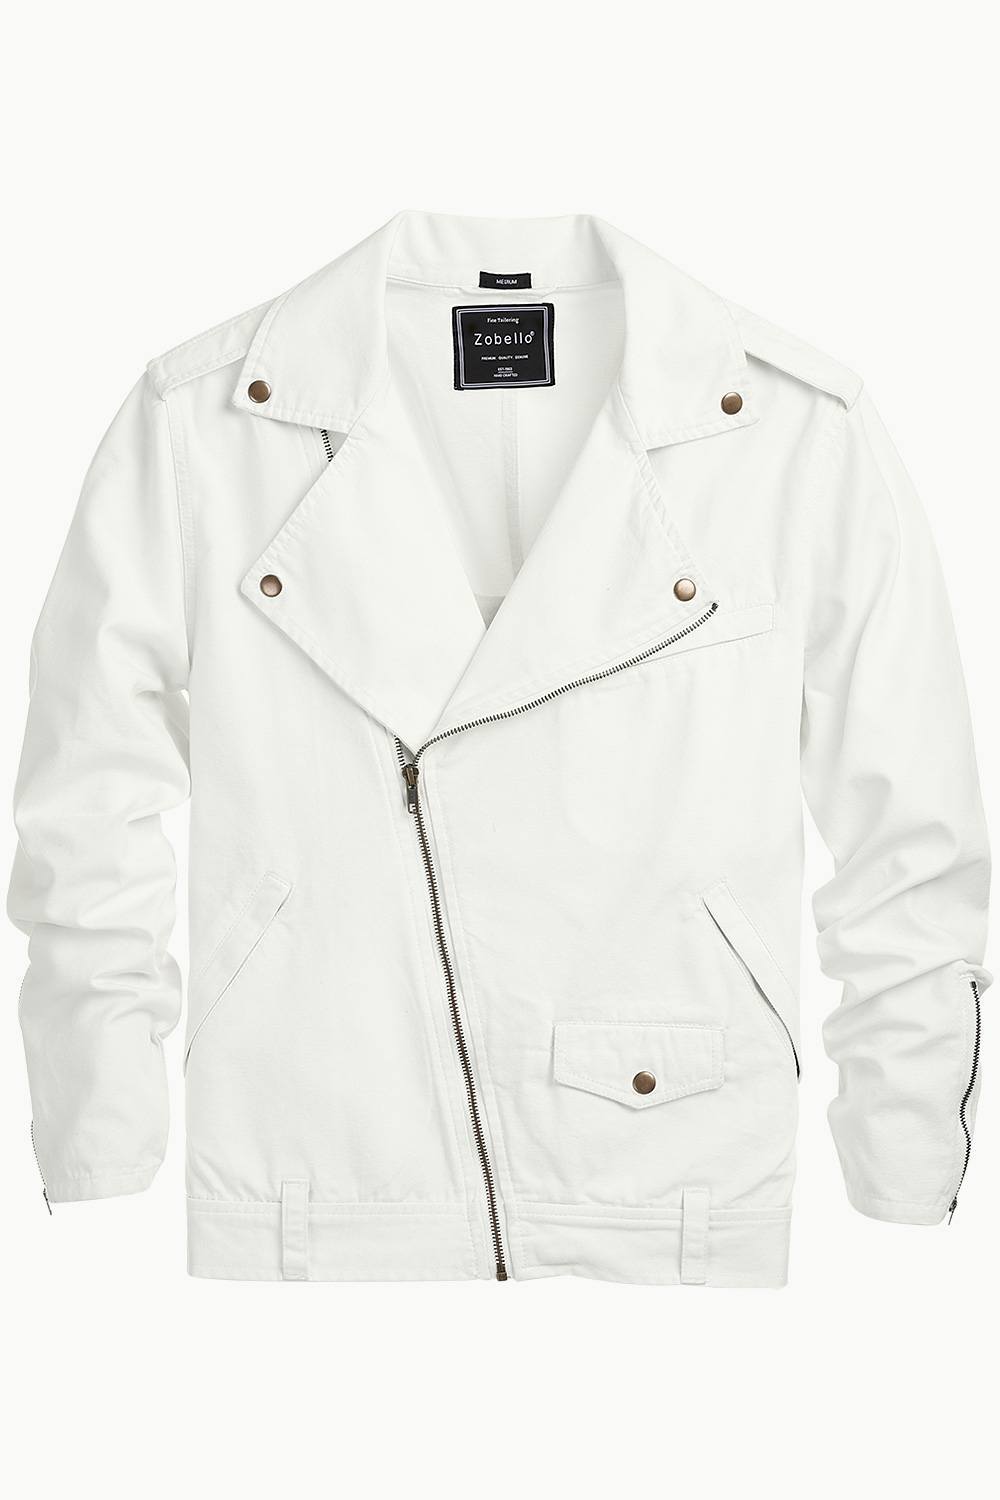 Off-White Tape Arrows Print Denim Jacket - Farfetch | Printed denim jacket,  Jackets men fashion, Printed denim